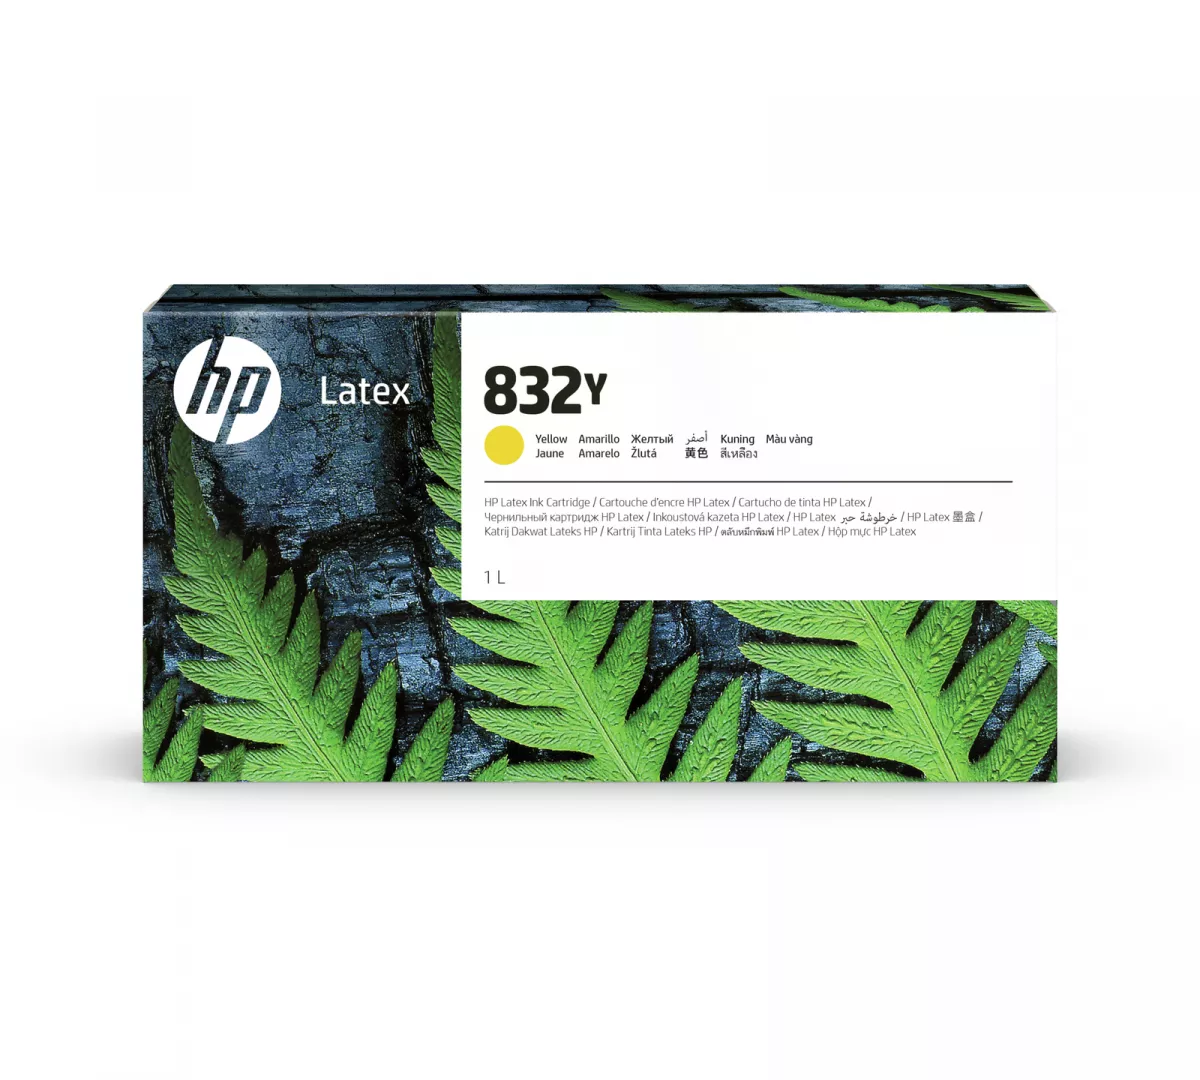 HP 832Y Yellow Latex Ink Cartridge 1 L 1